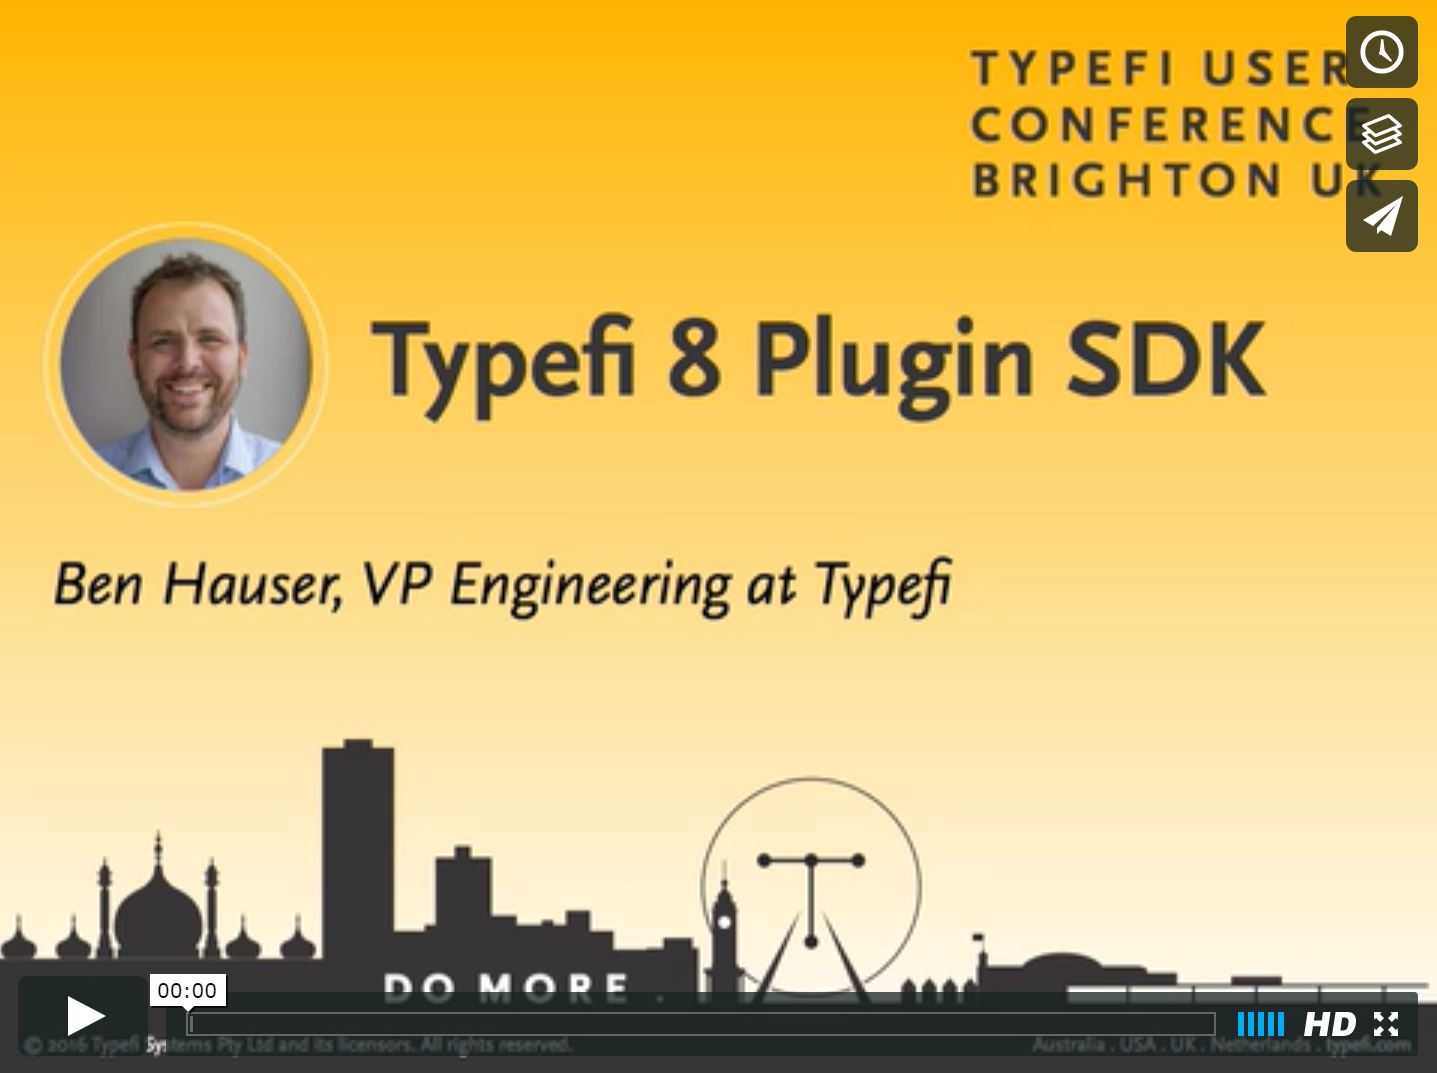 View Ben Hauser's Typefi 8 Plugin SDK presentation on Vimeo